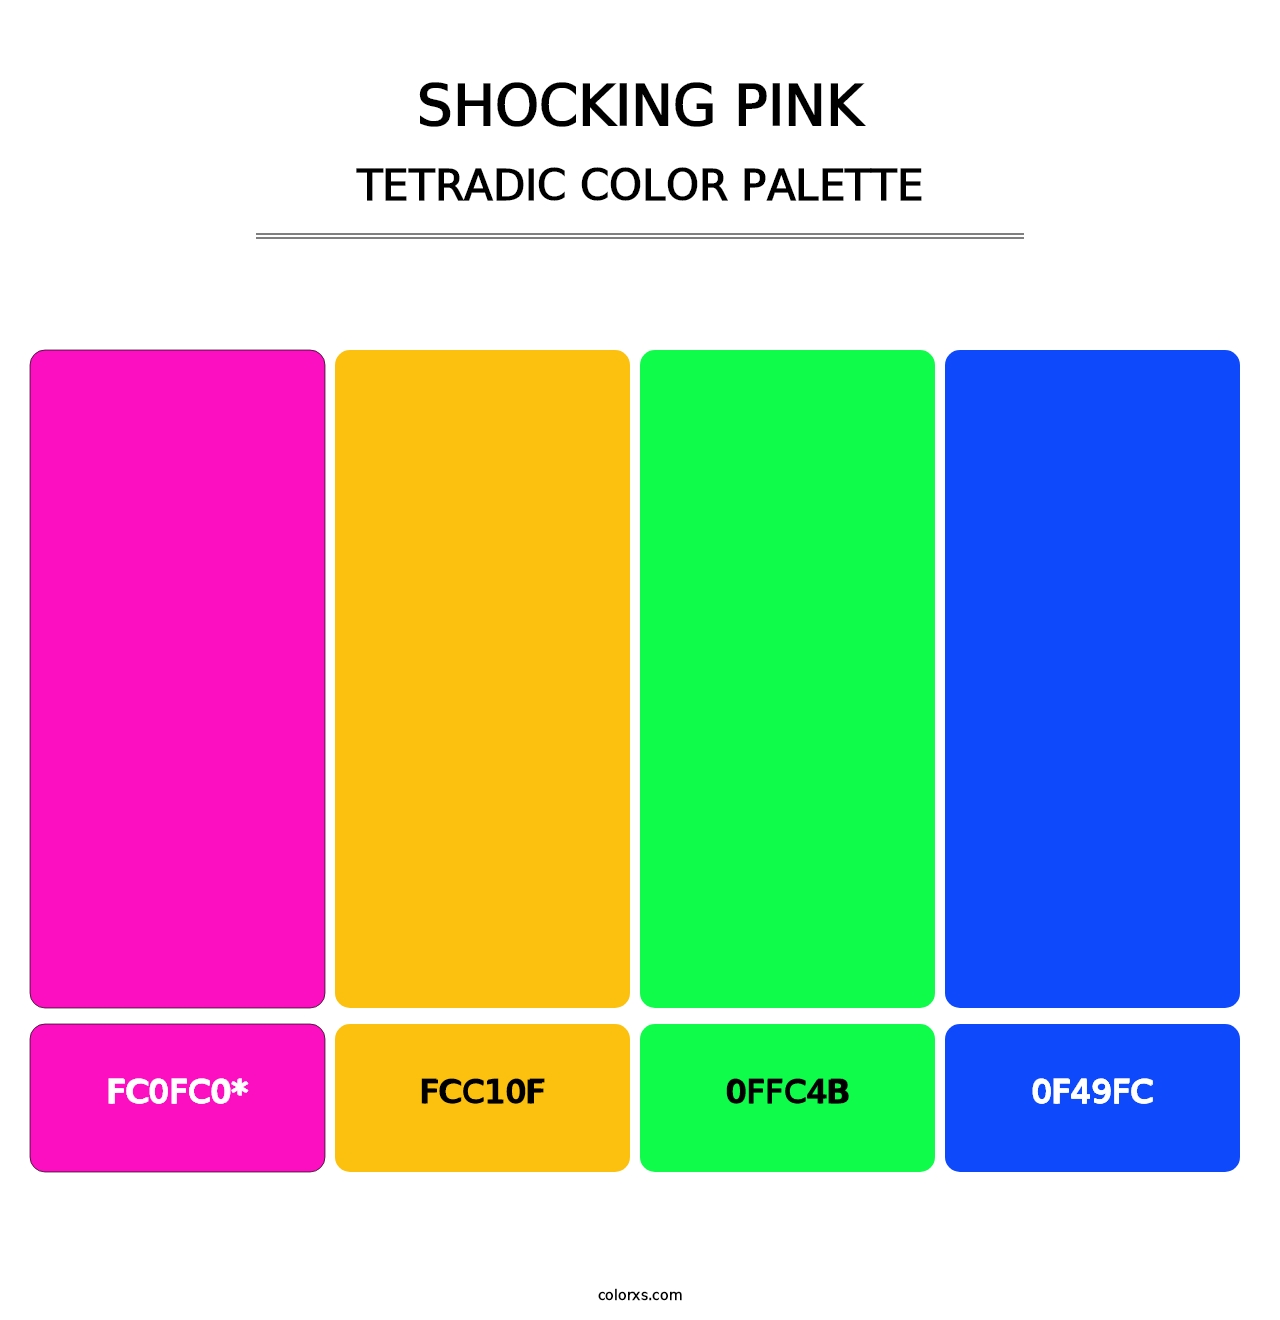 Shocking Pink - Tetradic Color Palette